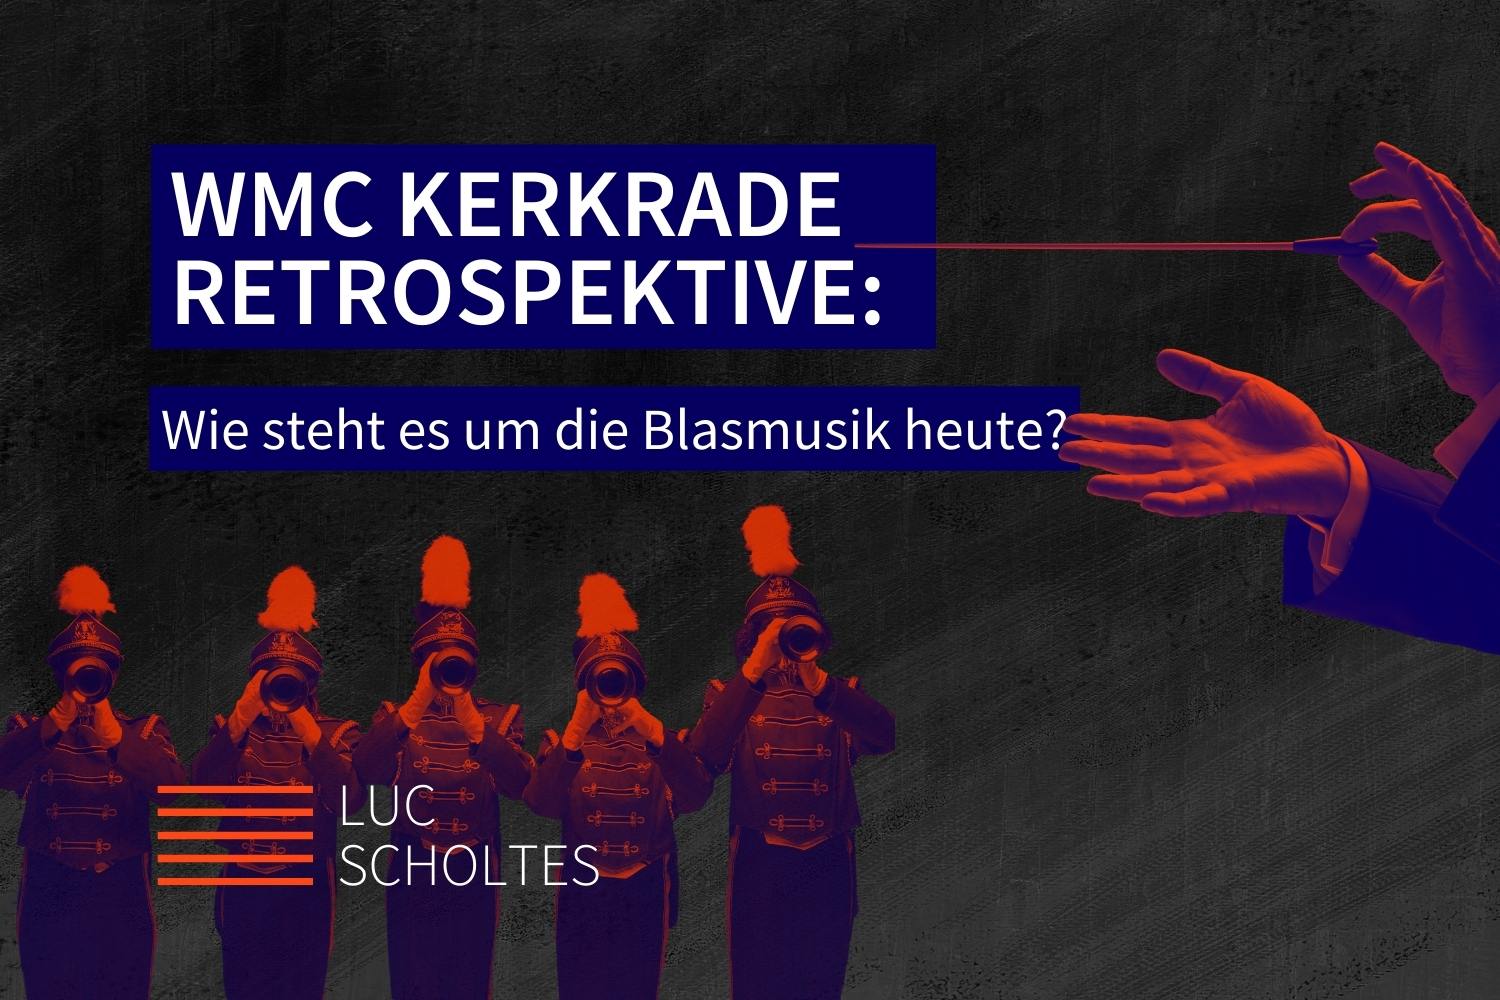 WMC Kerkrade Retrospektive Luc Scholtes